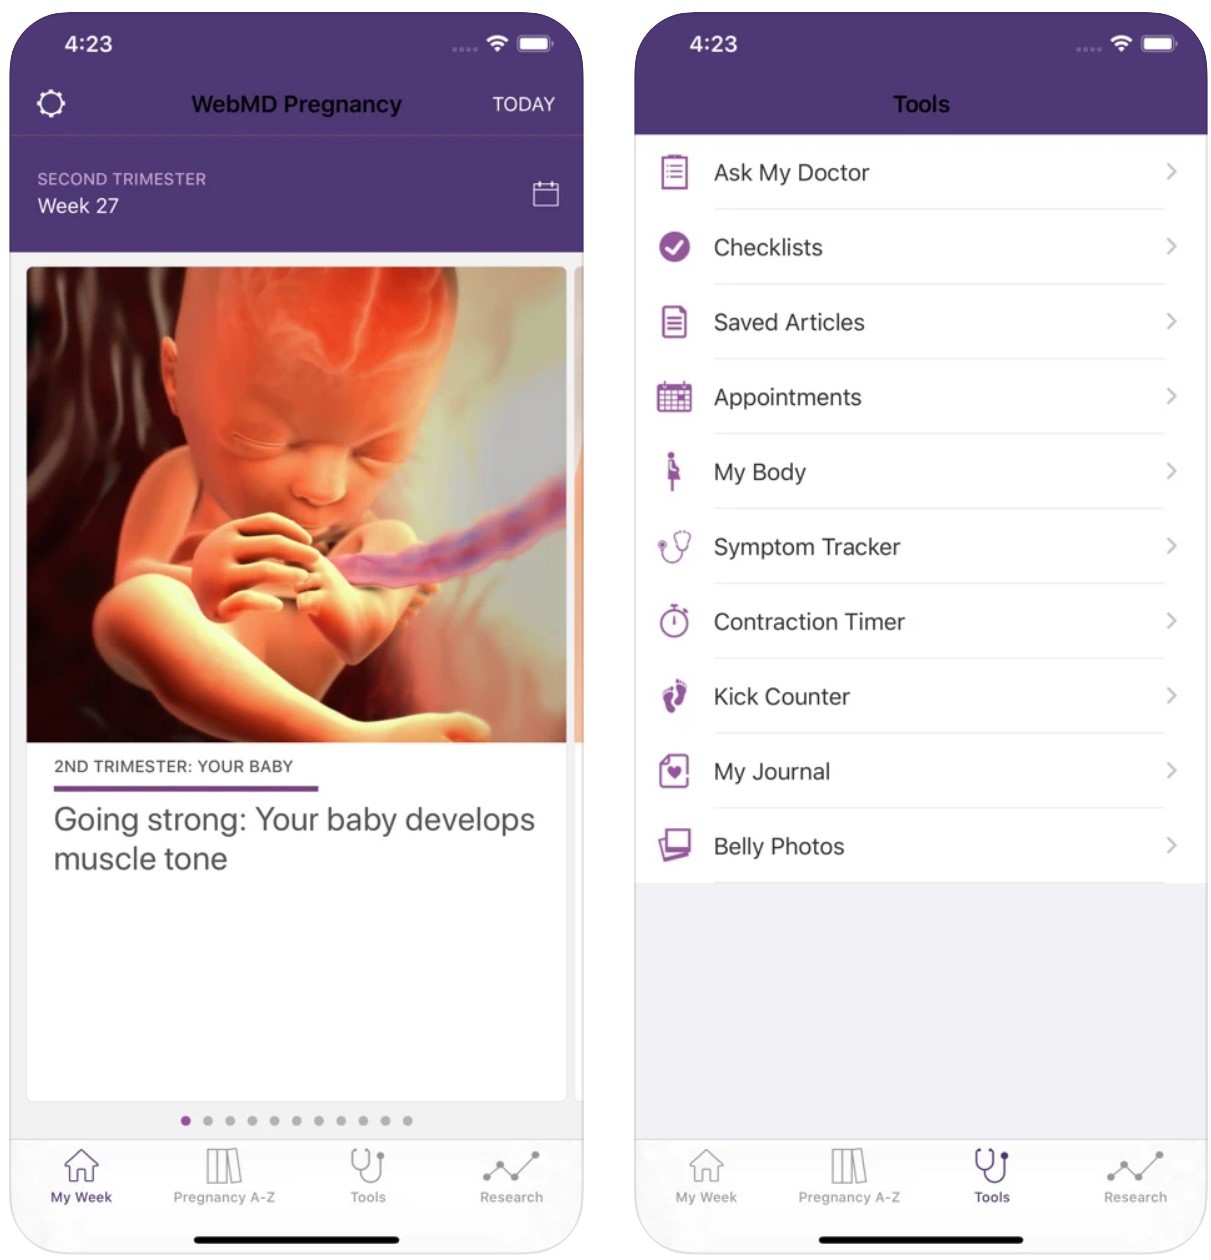 WebMD pregnancy app screenshots